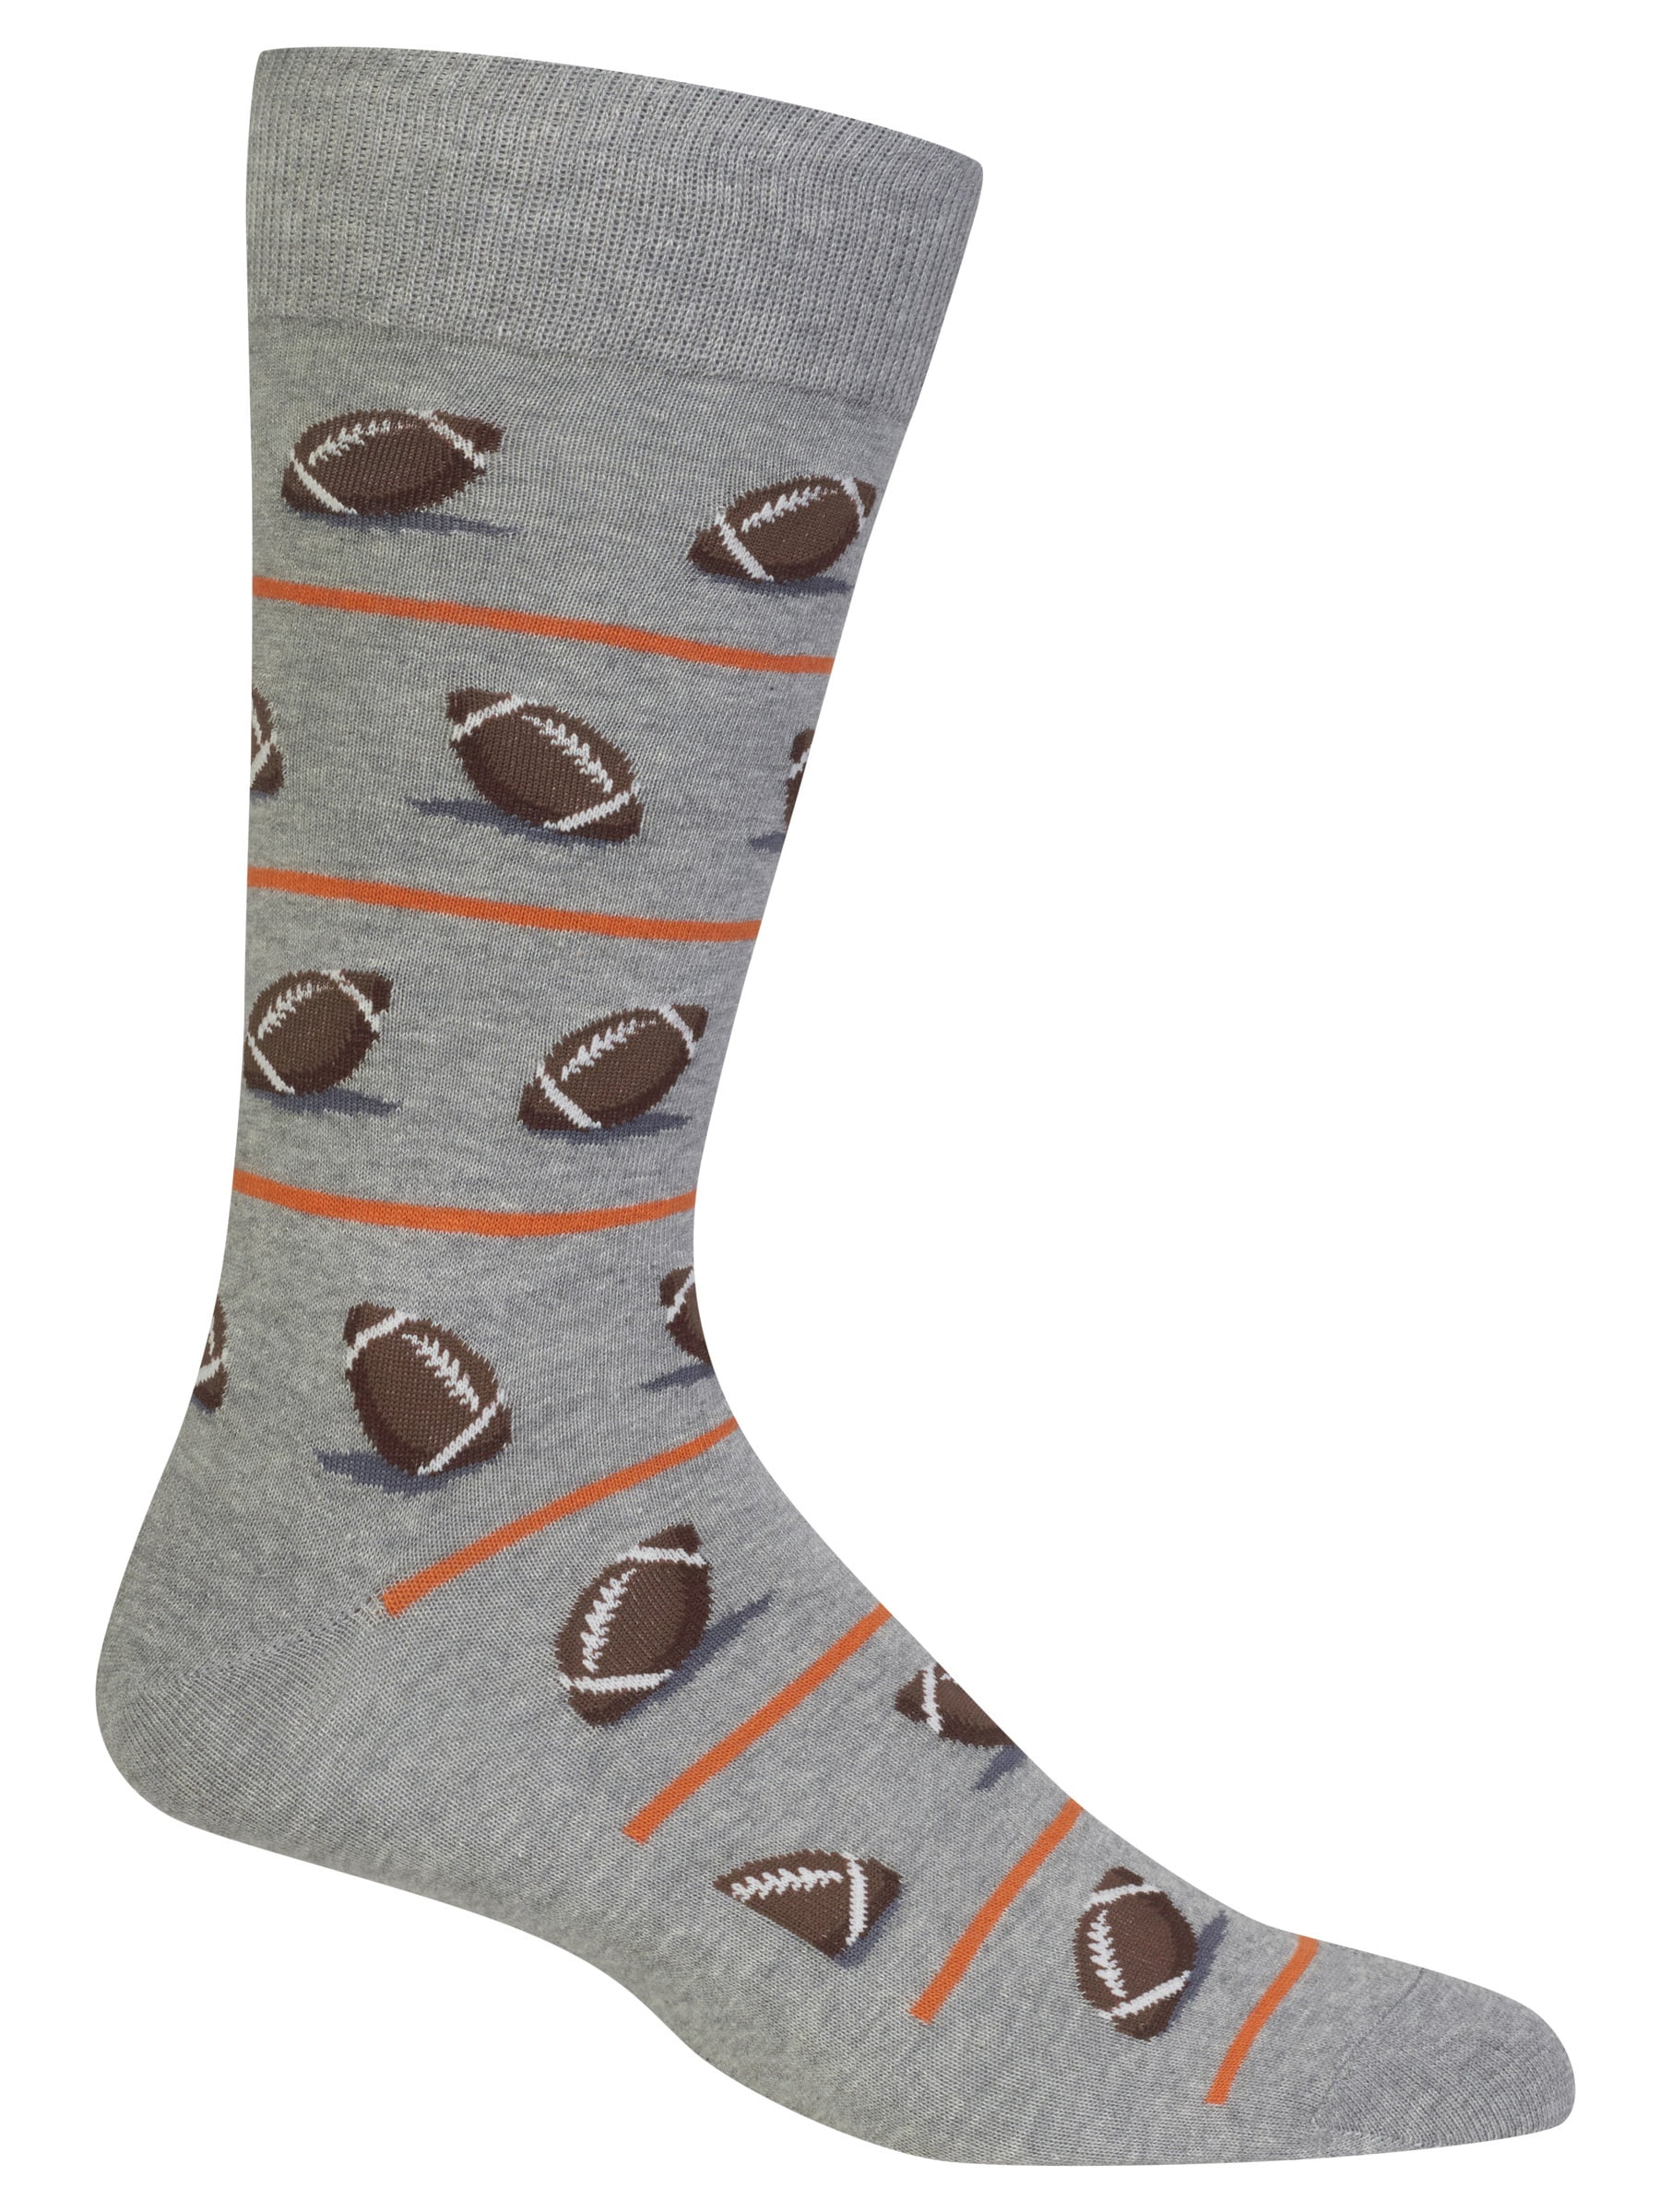 football novelty socks for men by hot sox - sweatshirt grey - Walmart.com